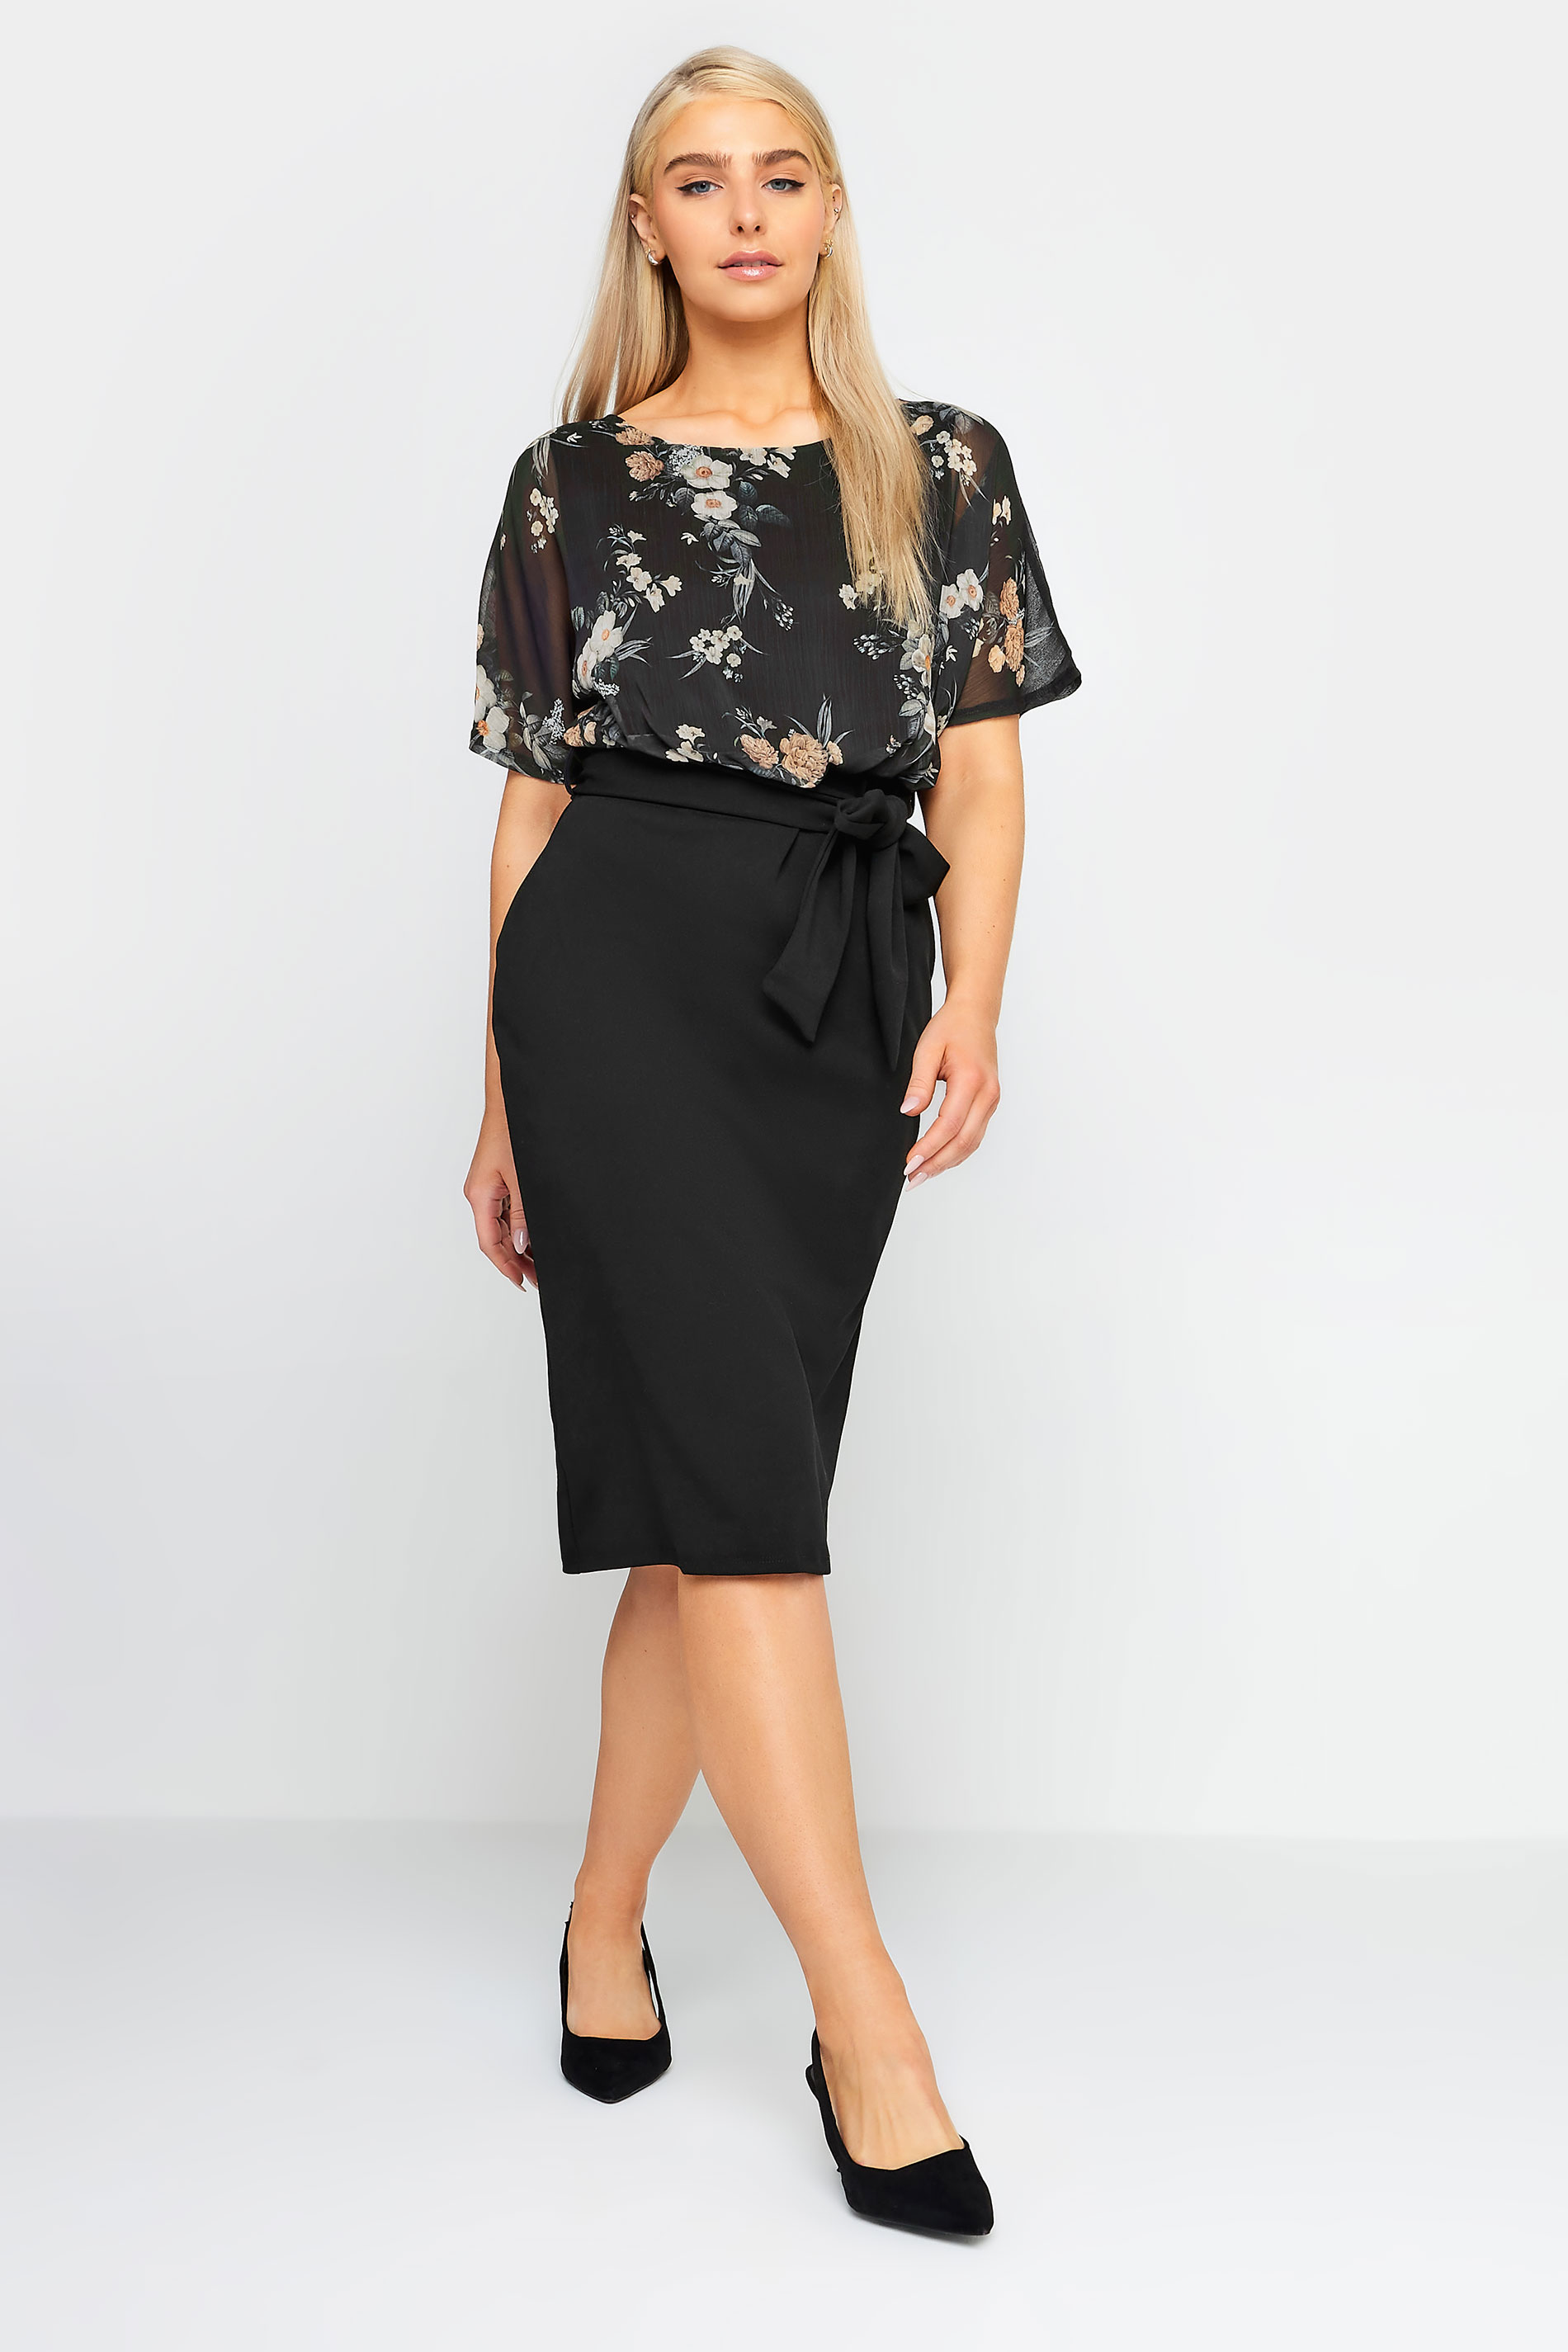 M&Co Black Floral Print 2 In 1 Tie Belt Dress | M&Co 3